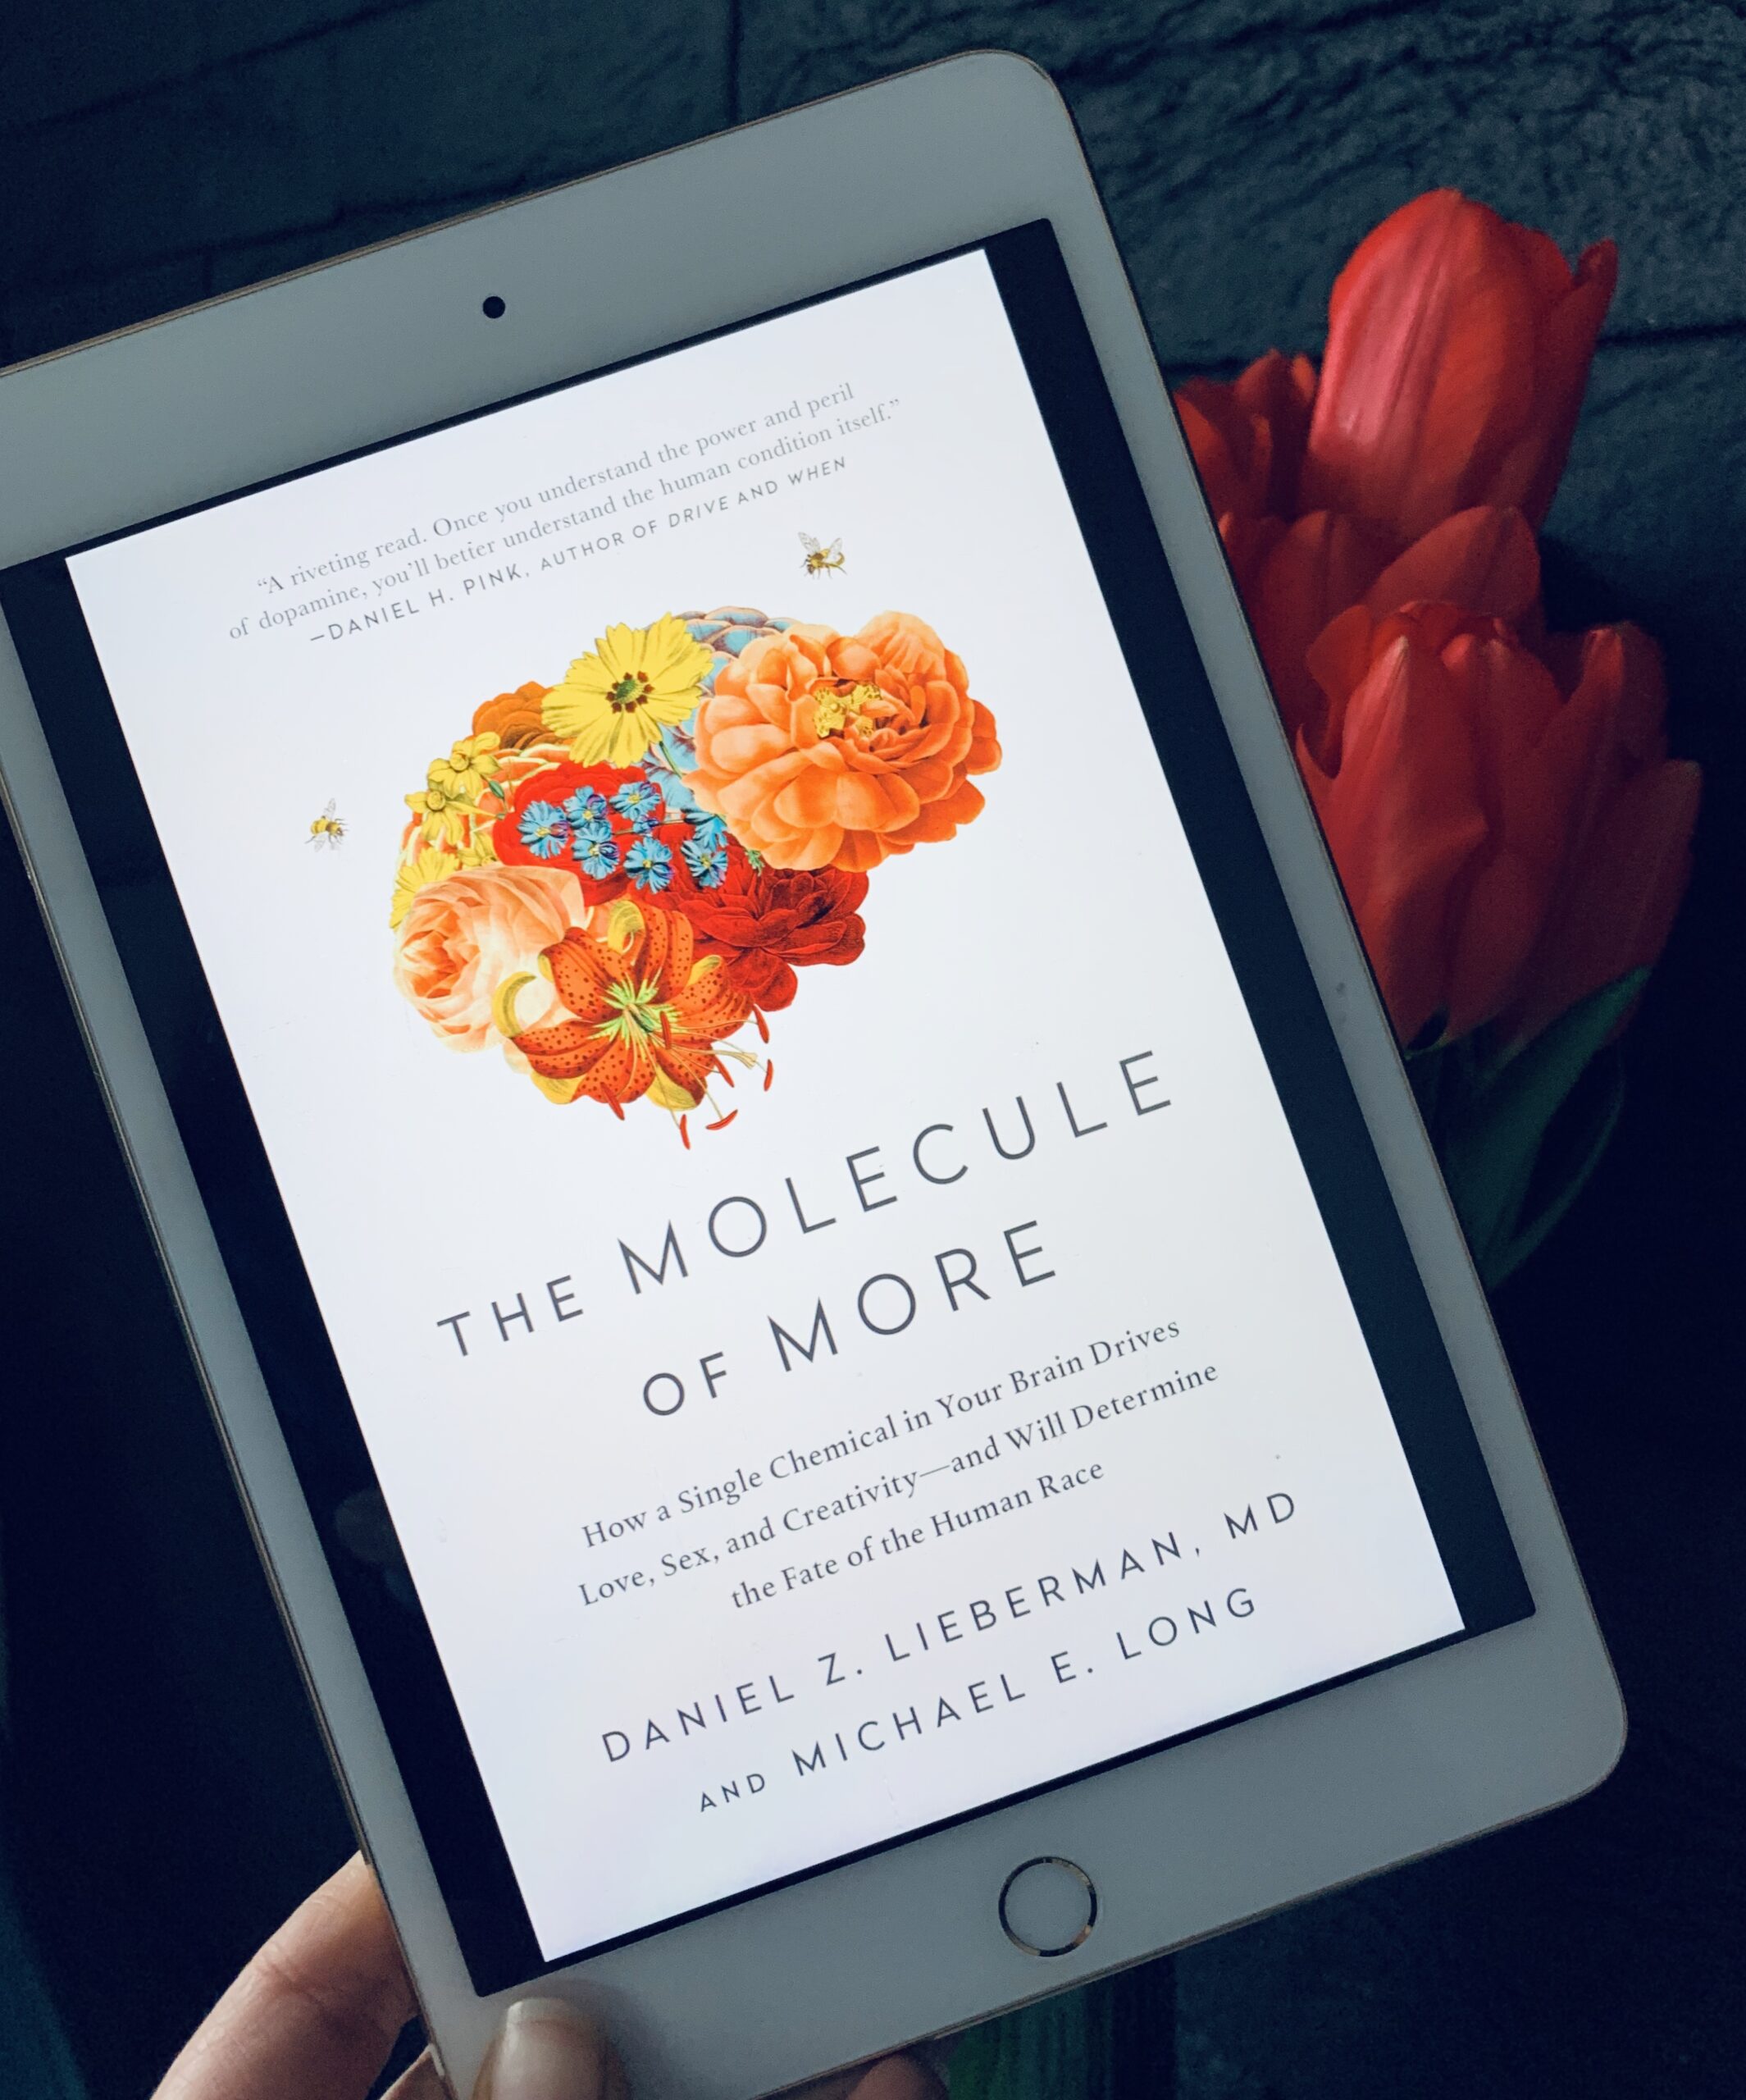 The Molecule of More. Daniel Z. Lieberman & Michael E. Long - Book Summary